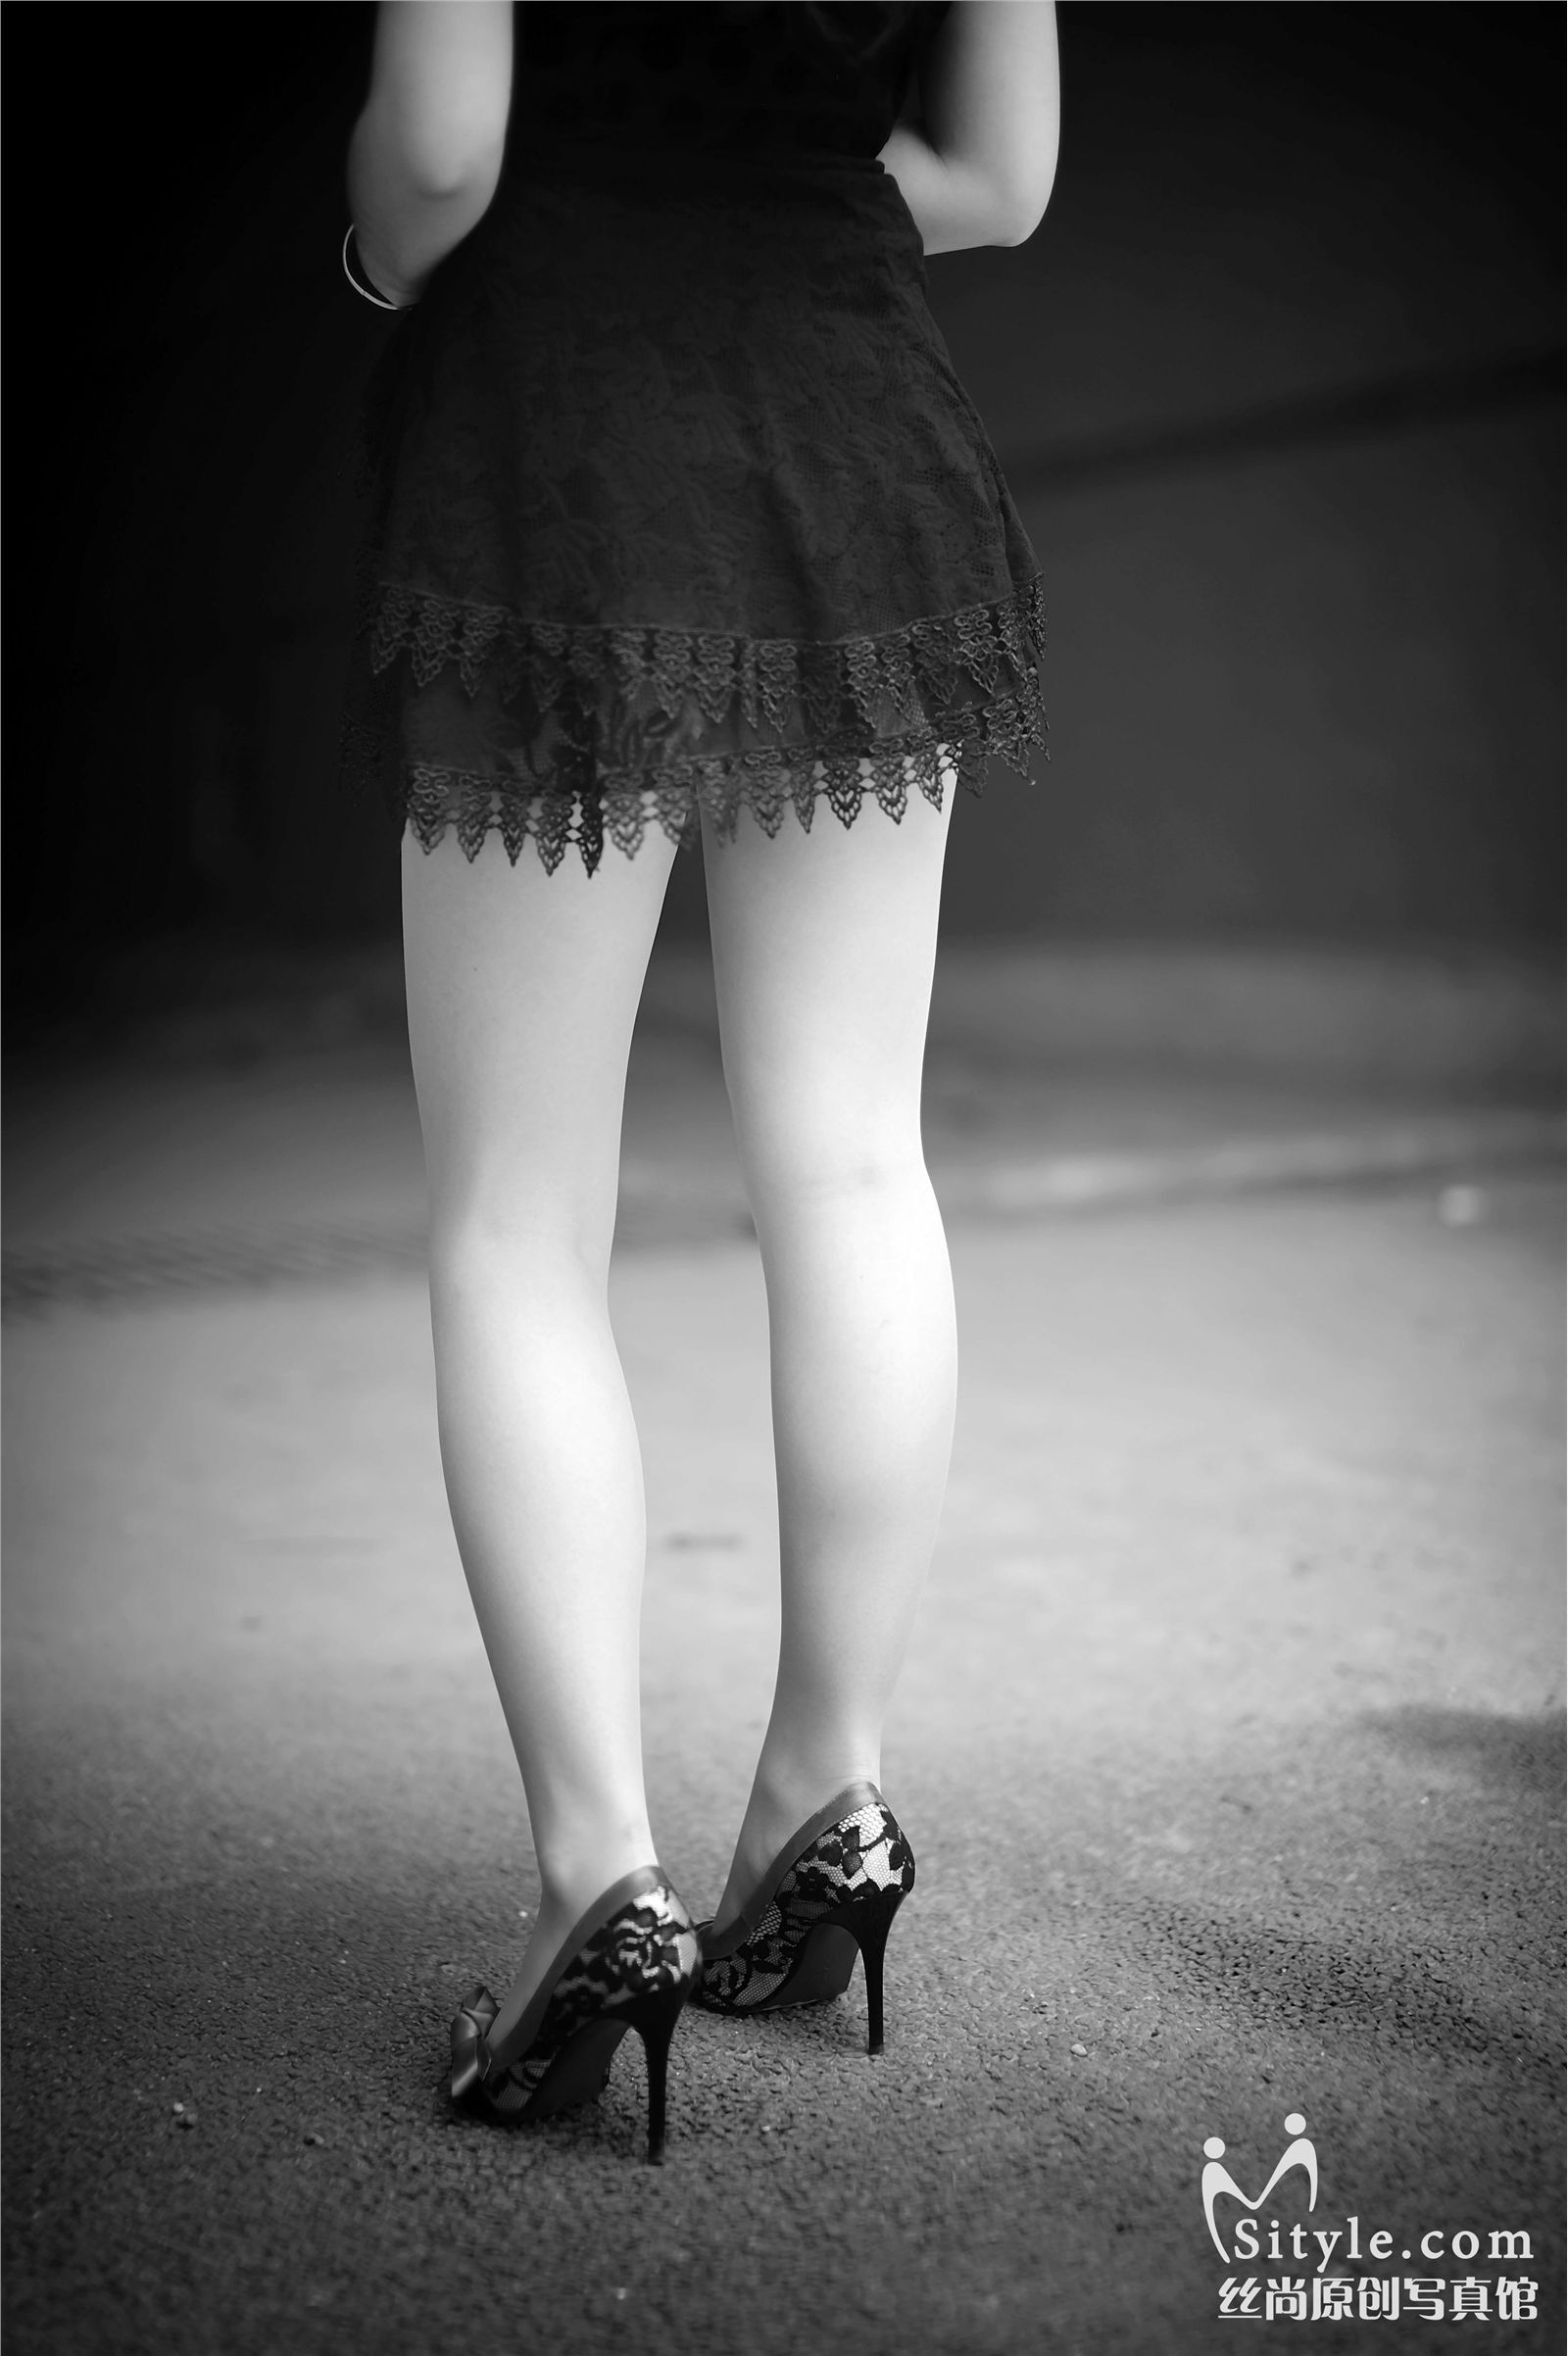 [sityle] 20120505 No.005 sishang Photo Gallery sexy and bold beauty stockings